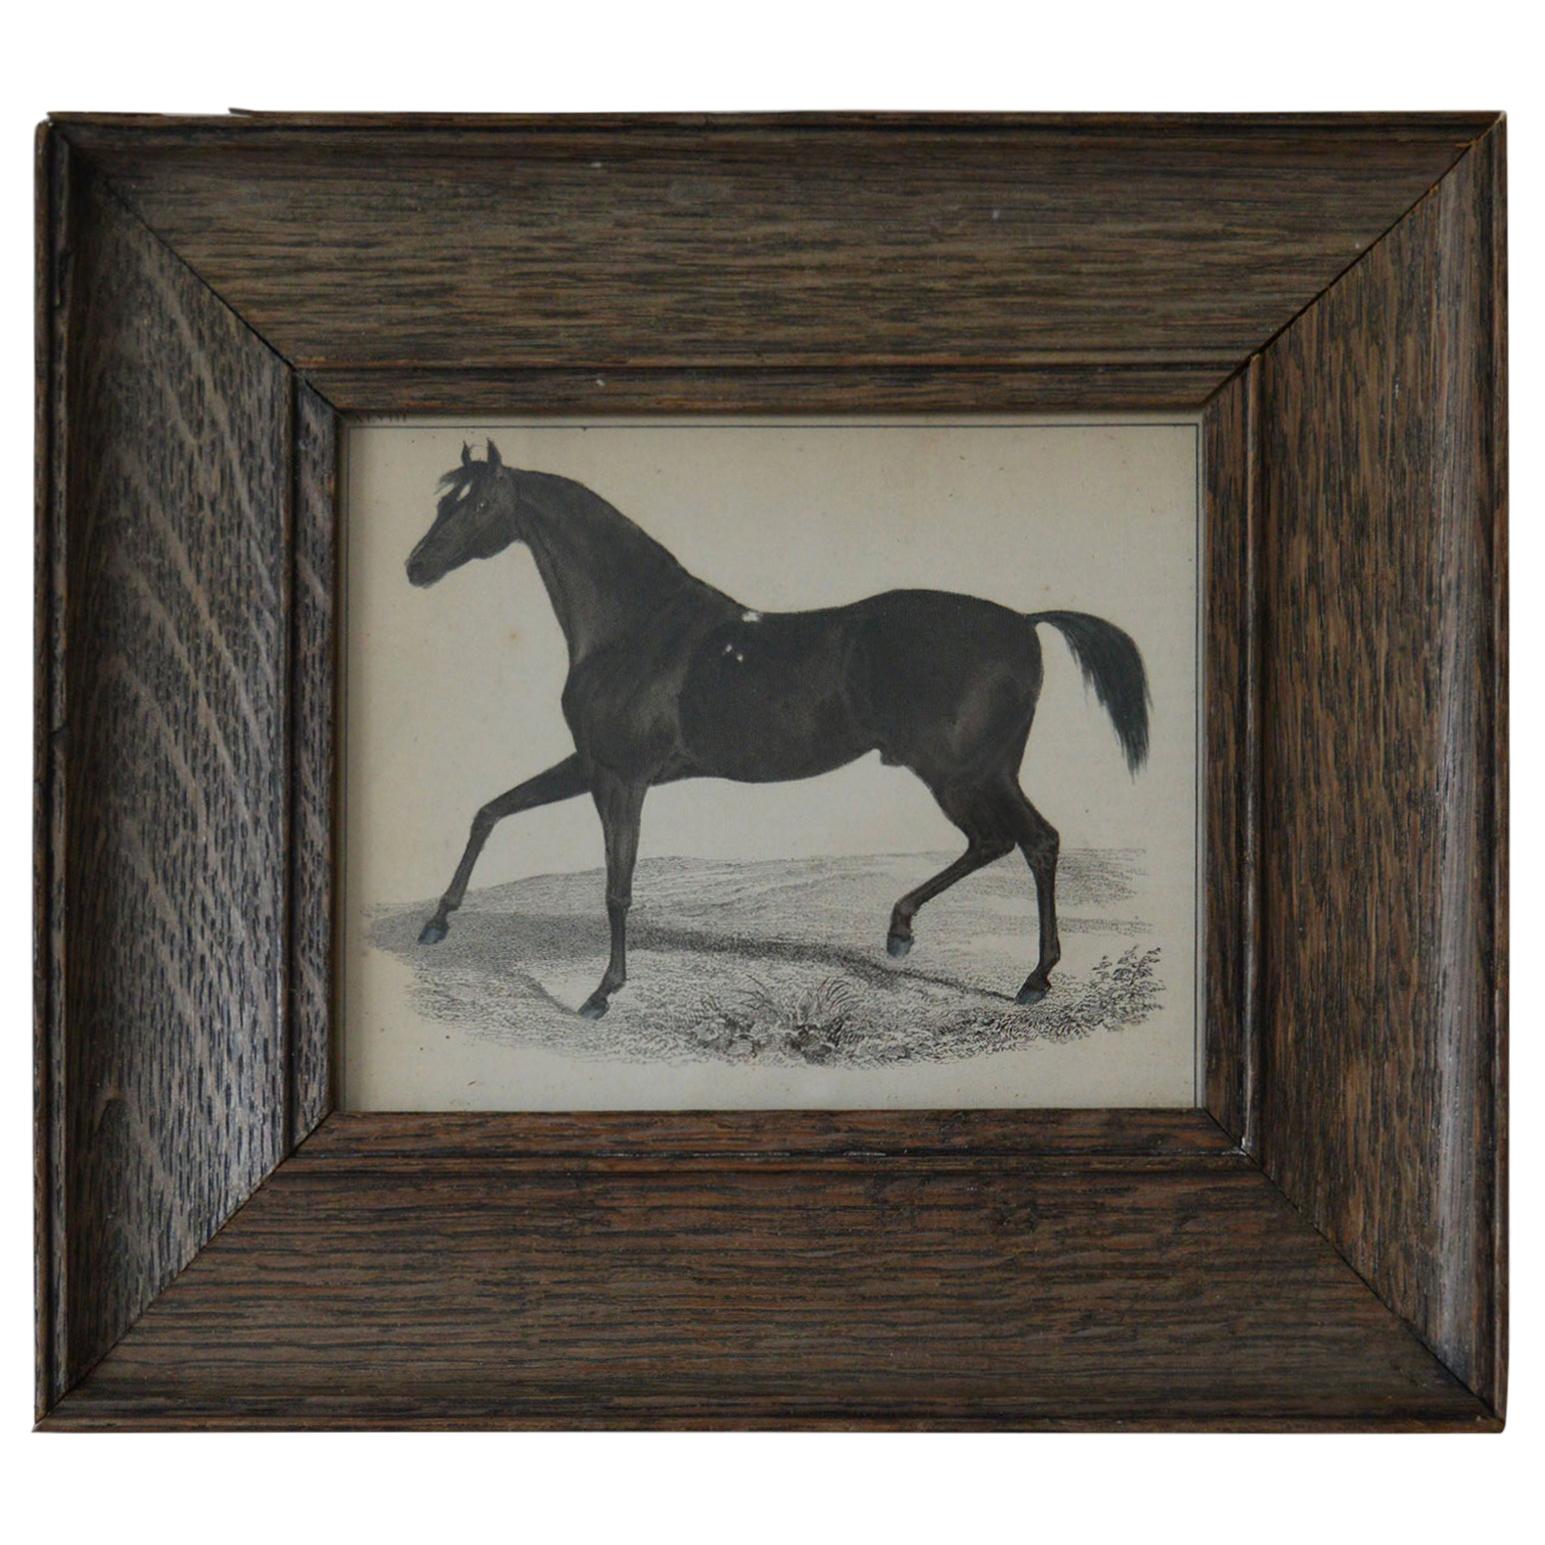 Original Antique Print of a Horse, 1847